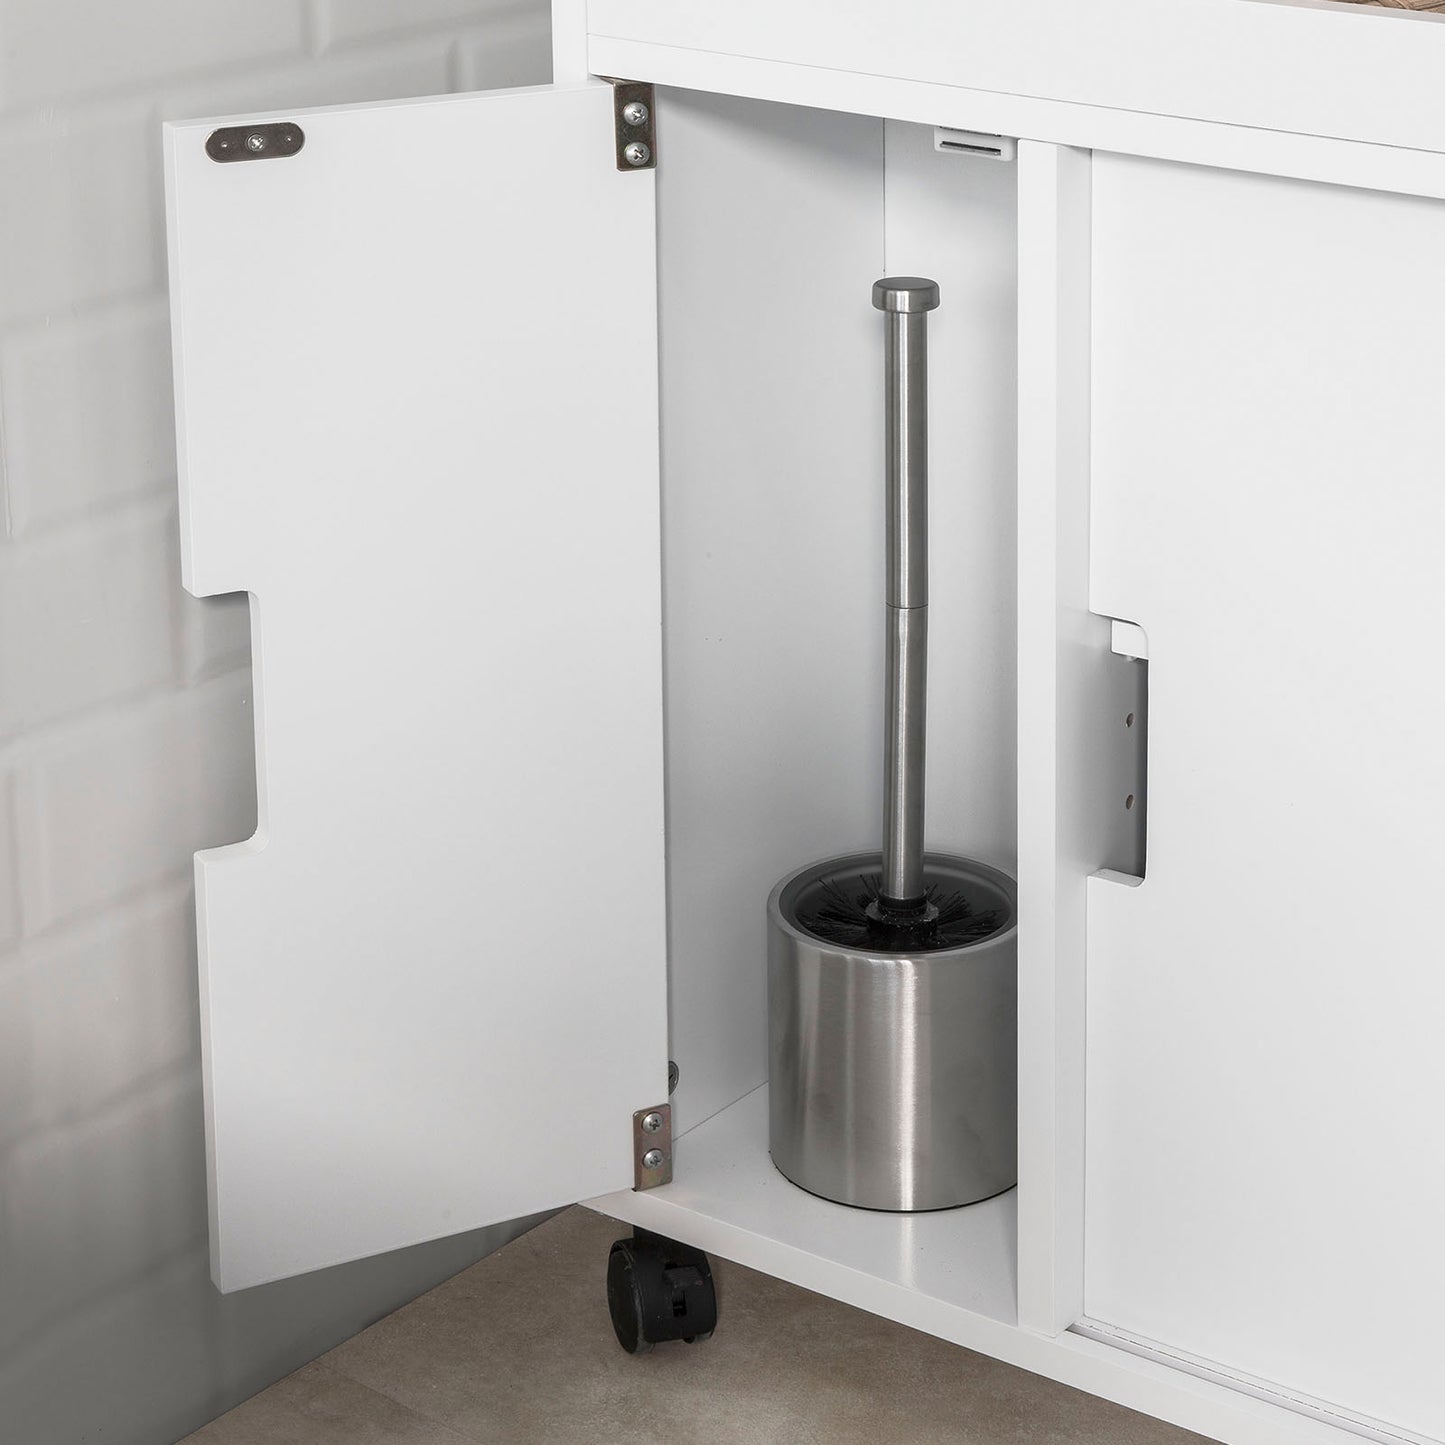 SoBuy Bathroom Toilet Paper Roll Holder, Bathroom Storage Cabinet Cupboard on Wheels